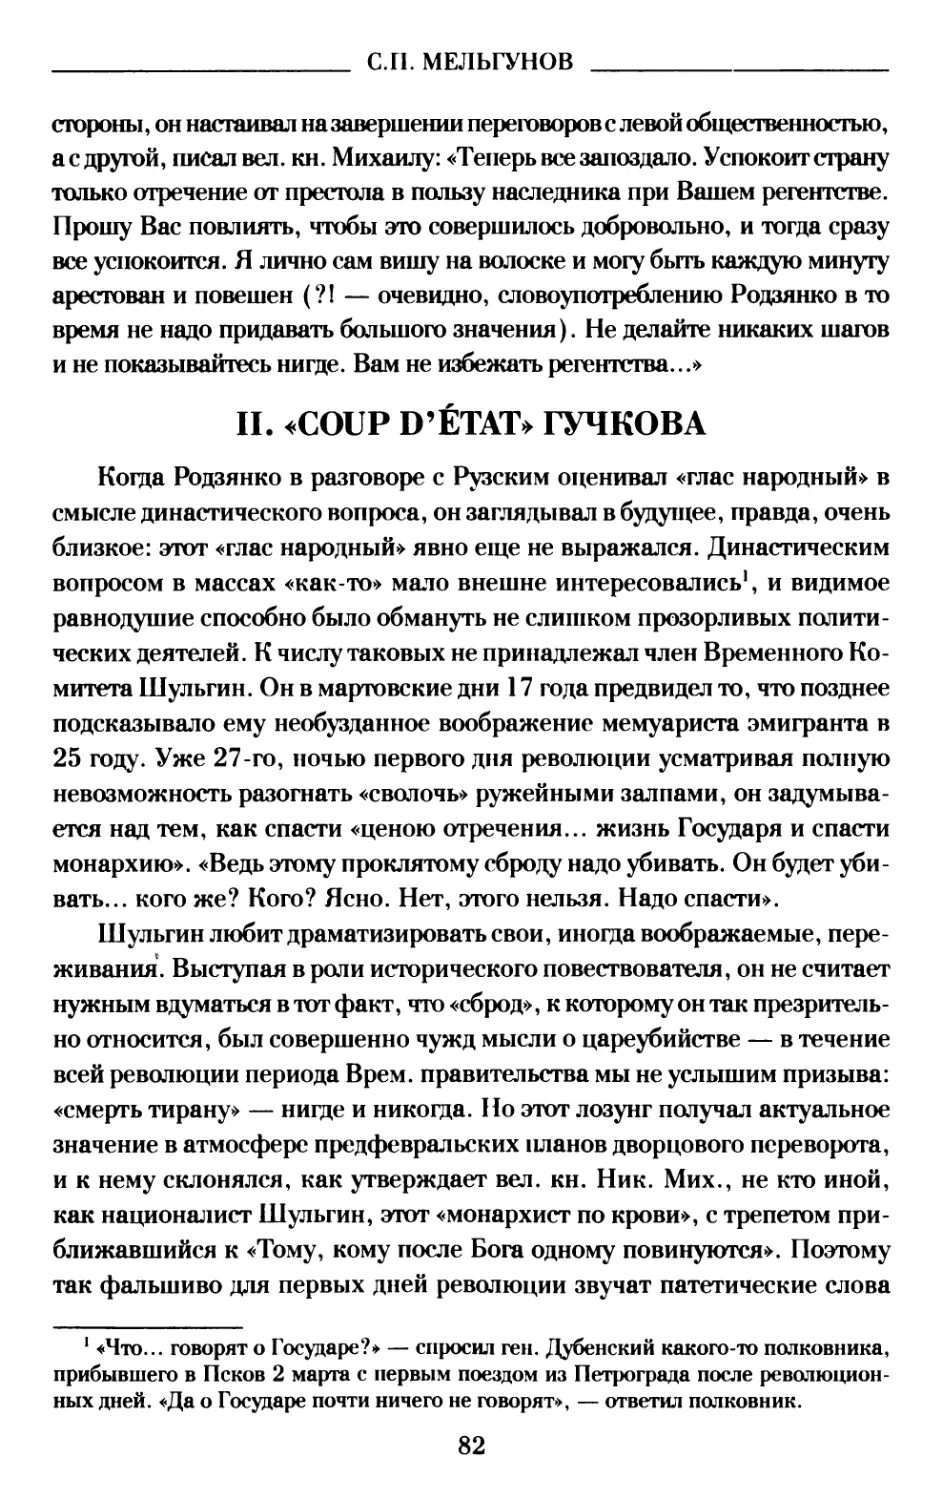 II. «Coup d’État» Гучкова